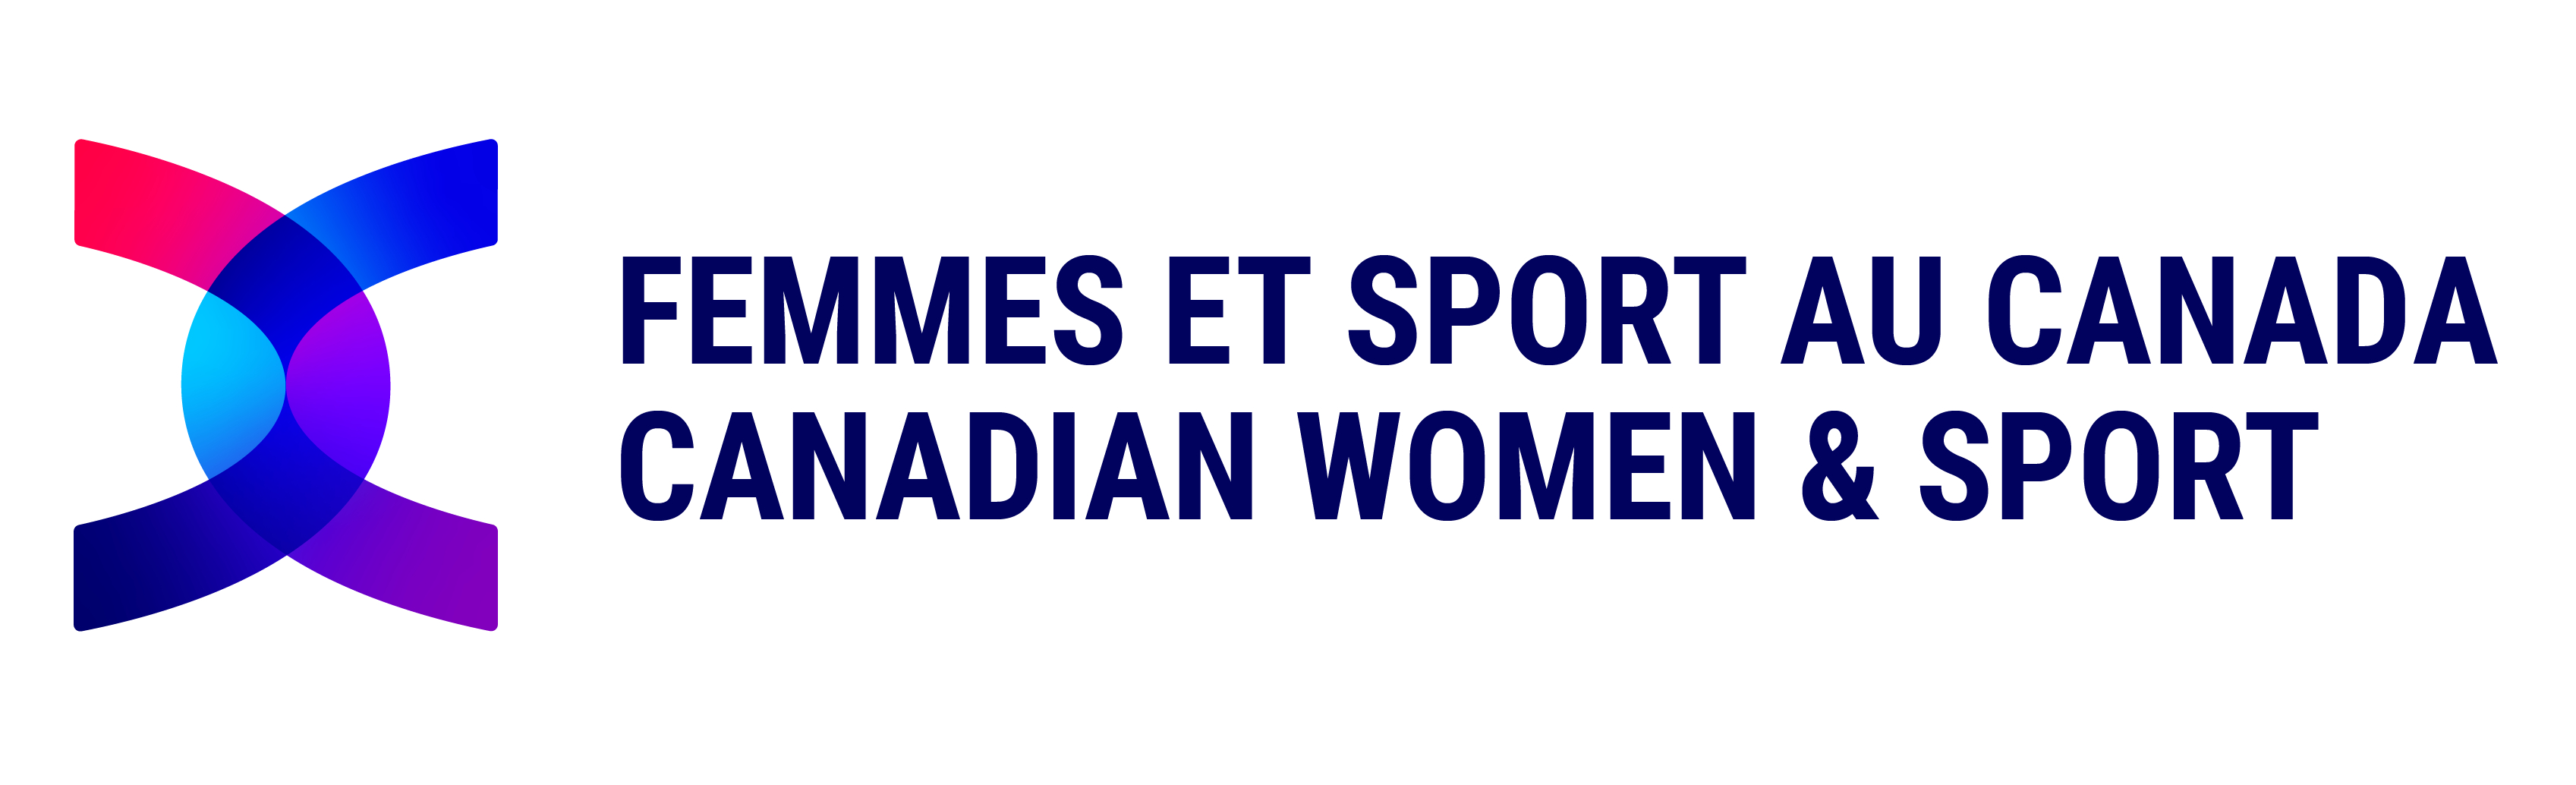 New Study Shows Economic Viability for Professional Women's Sport